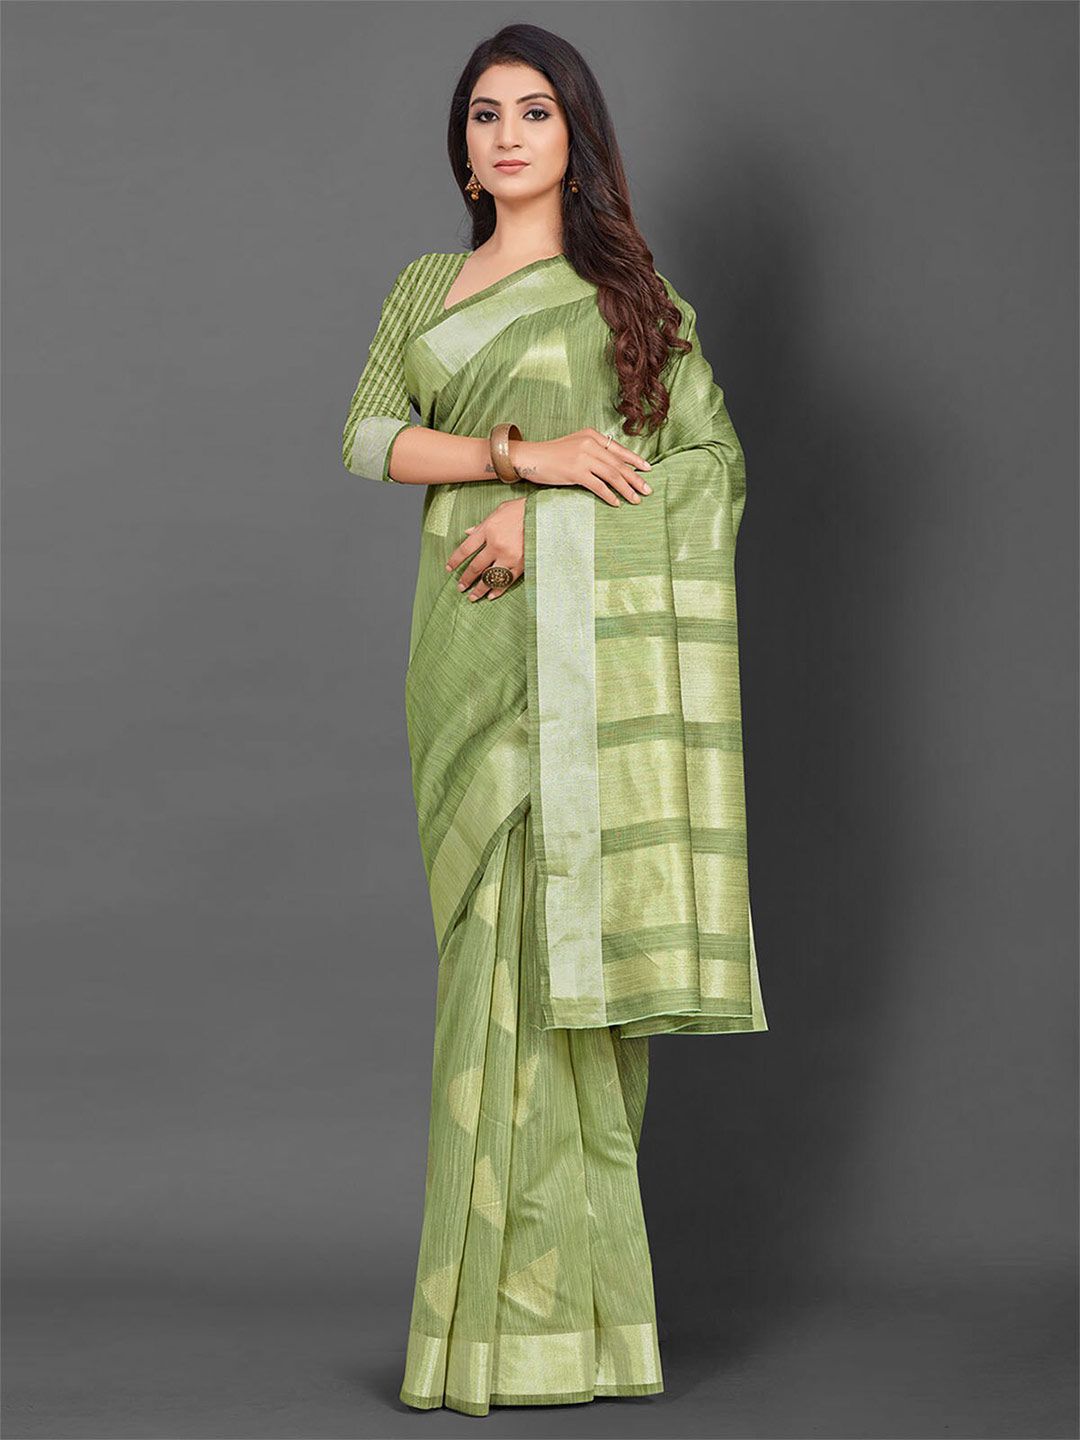 ODETTE Green & Gold-Toned Woven Design Zari Linen Blend Saree Price in India